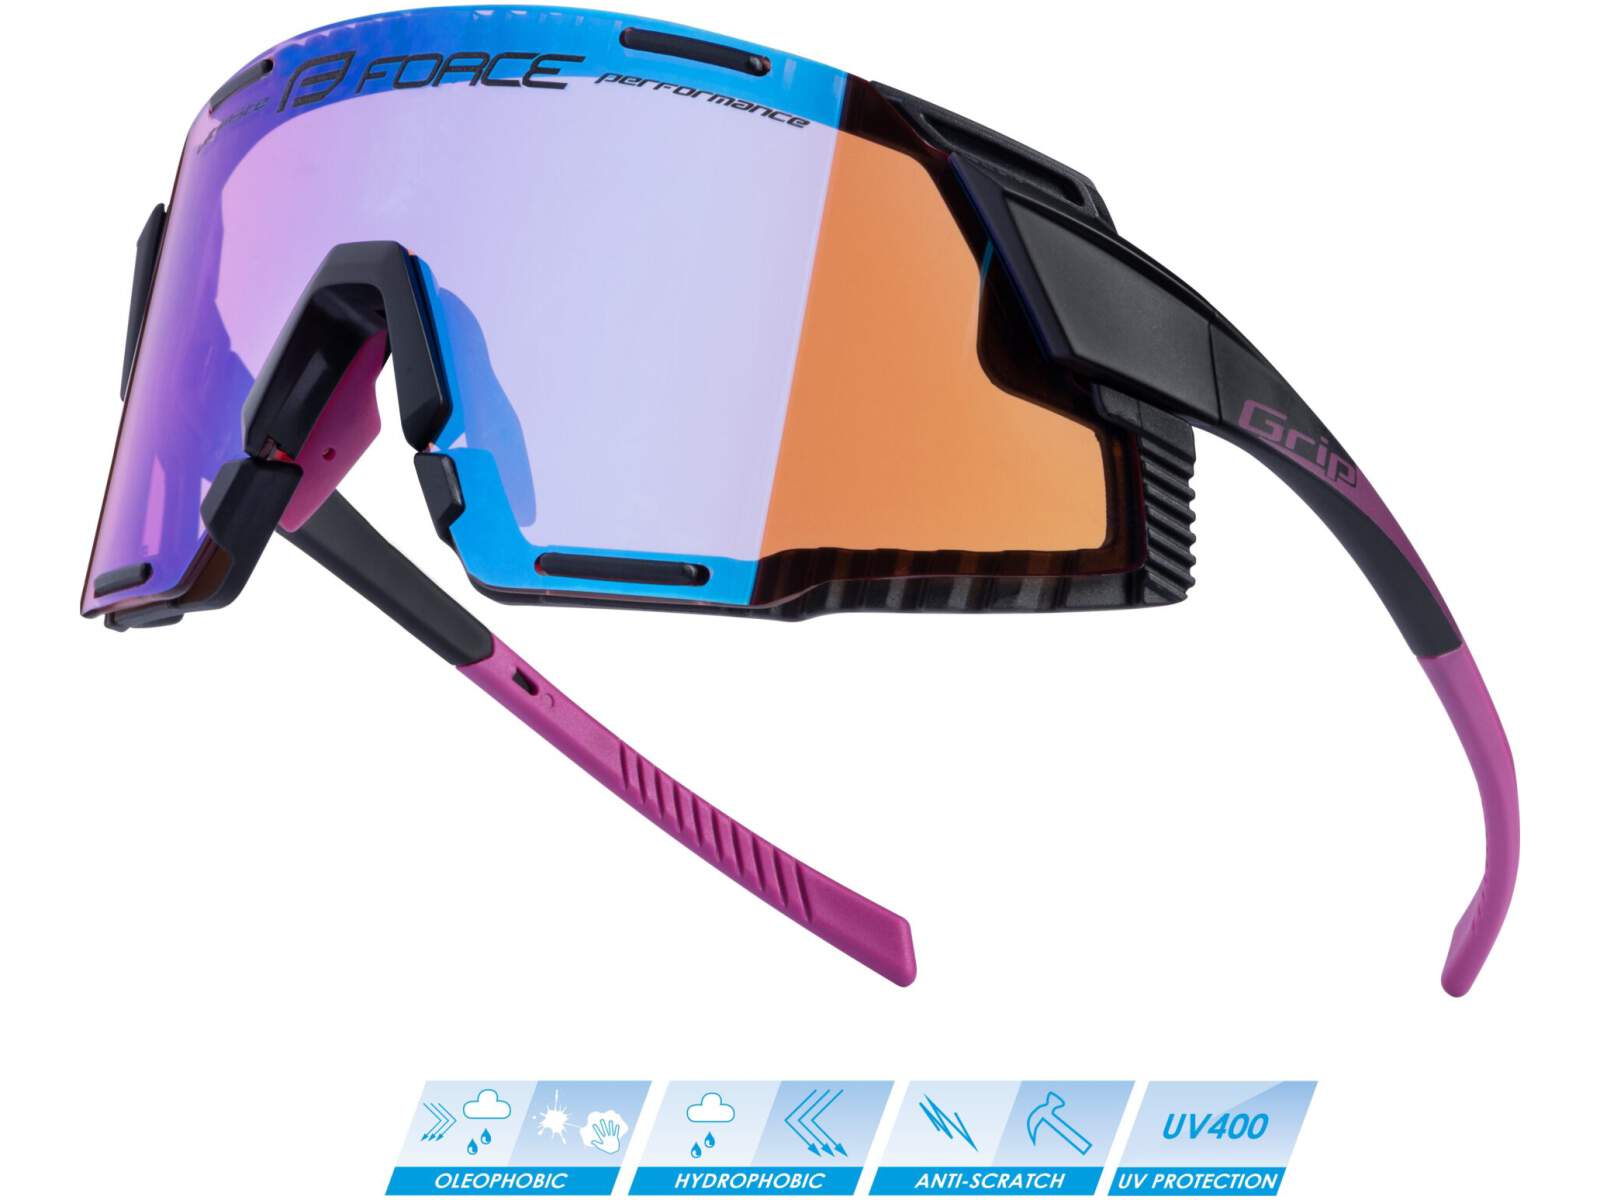 Okulary rowerowe Force GRIP szkła fioletowe kontrastowe